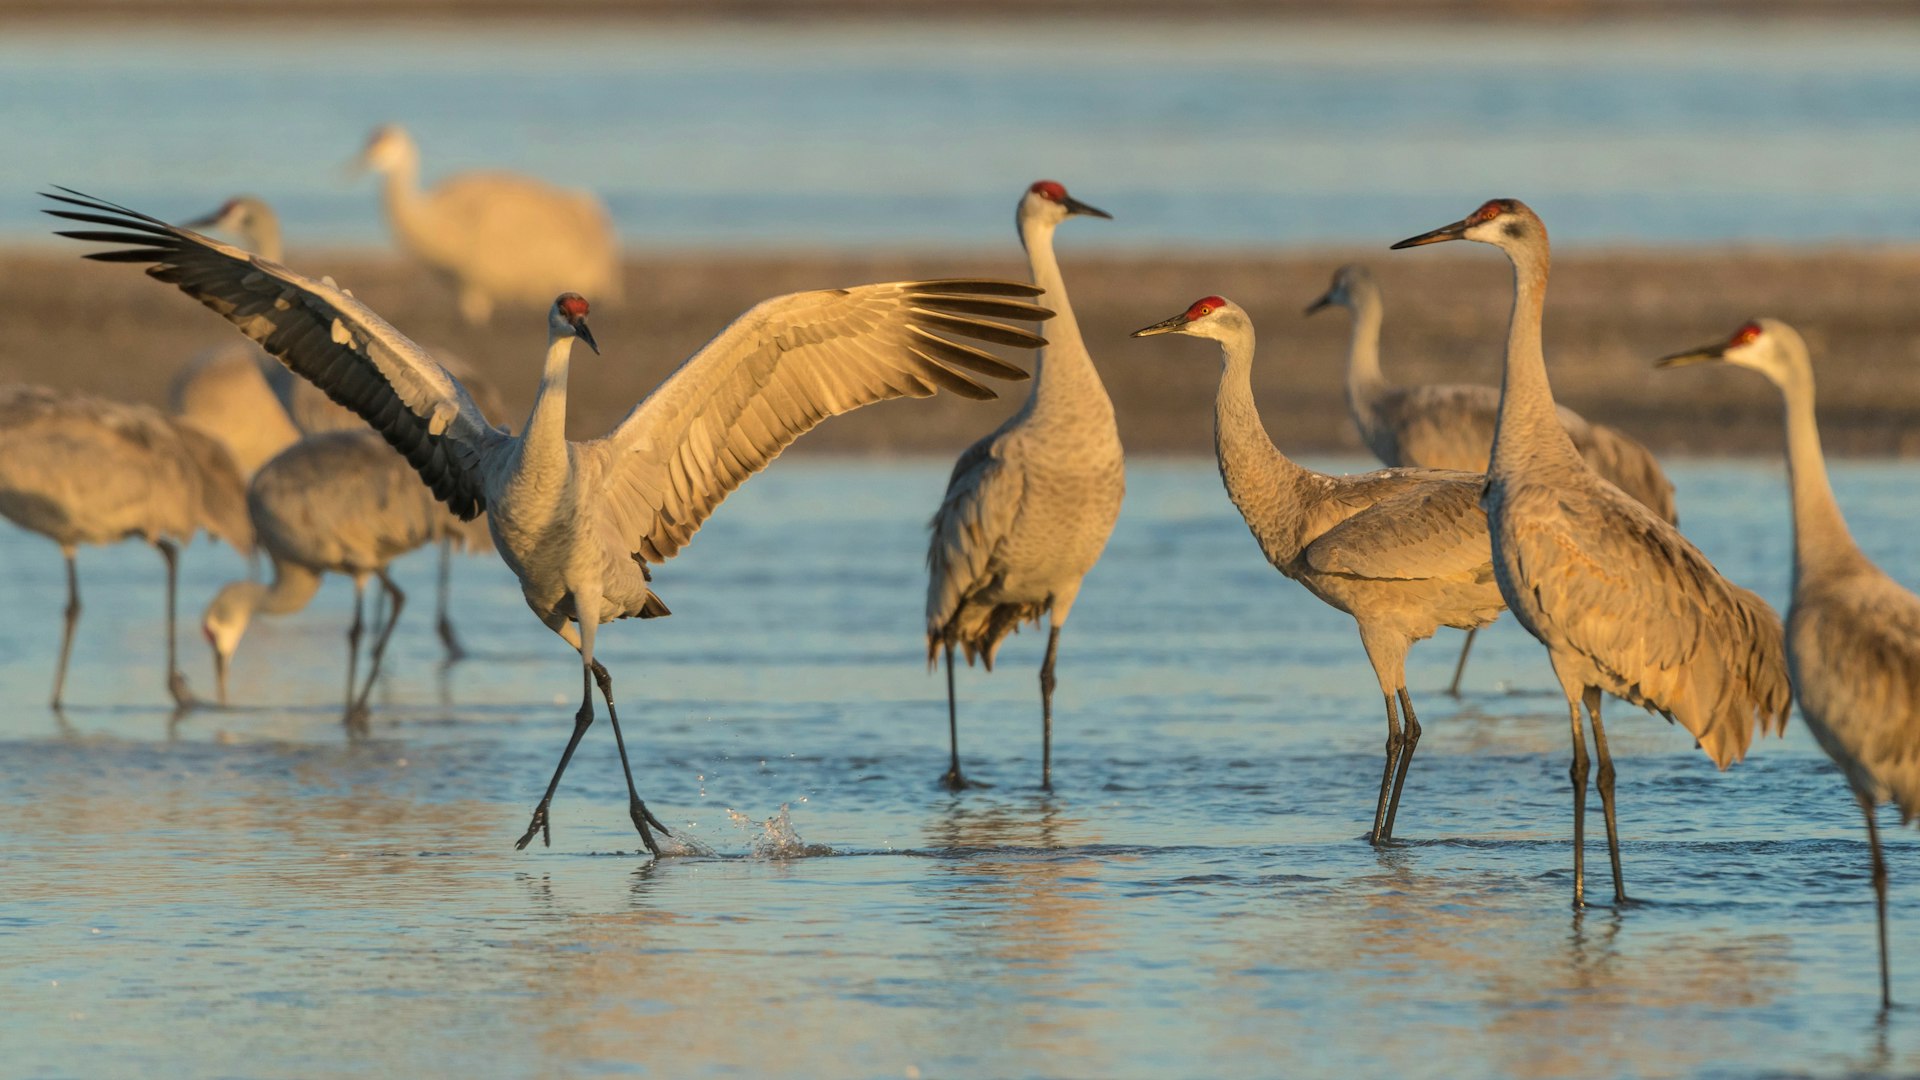 Sandhill cranes stopping on their spring migration, Platte River, Nebraska, USA